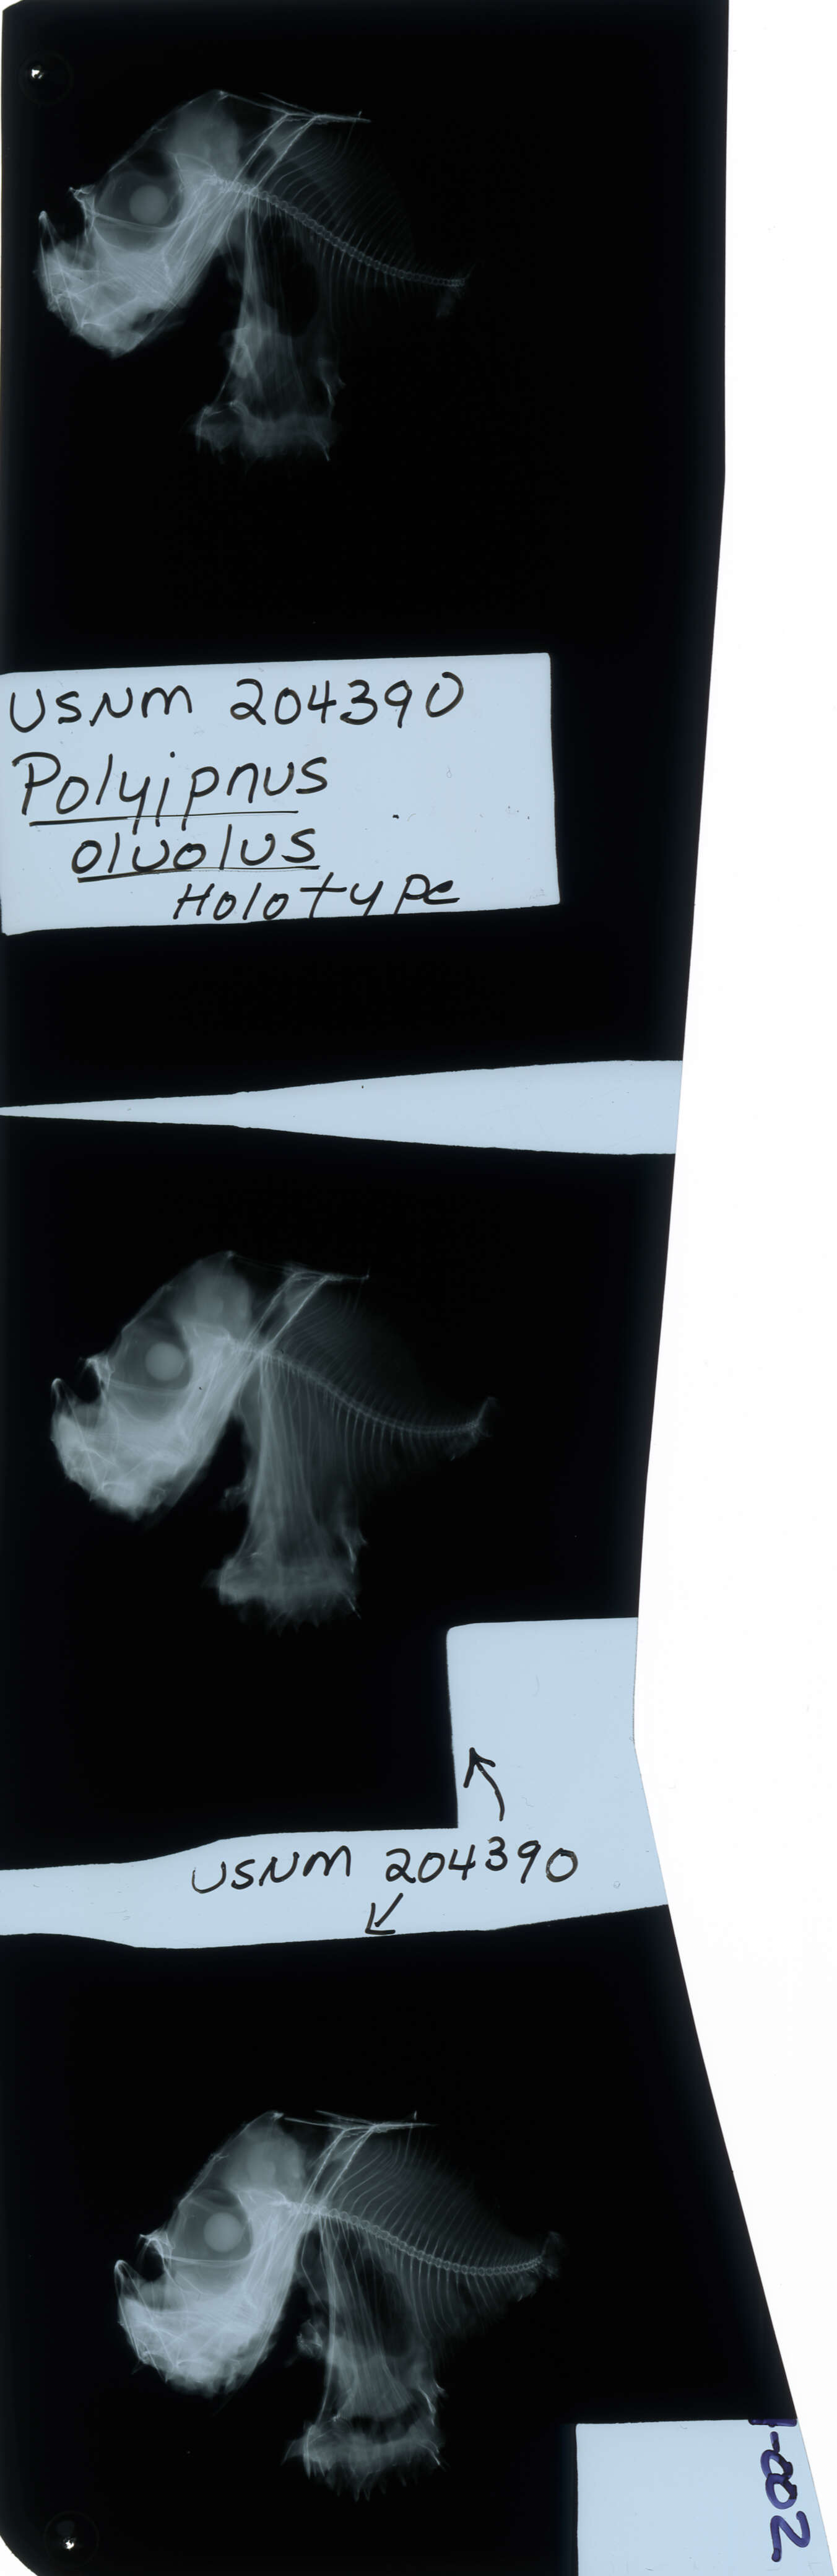 Image of Polyipnus oluolus Baird 1971